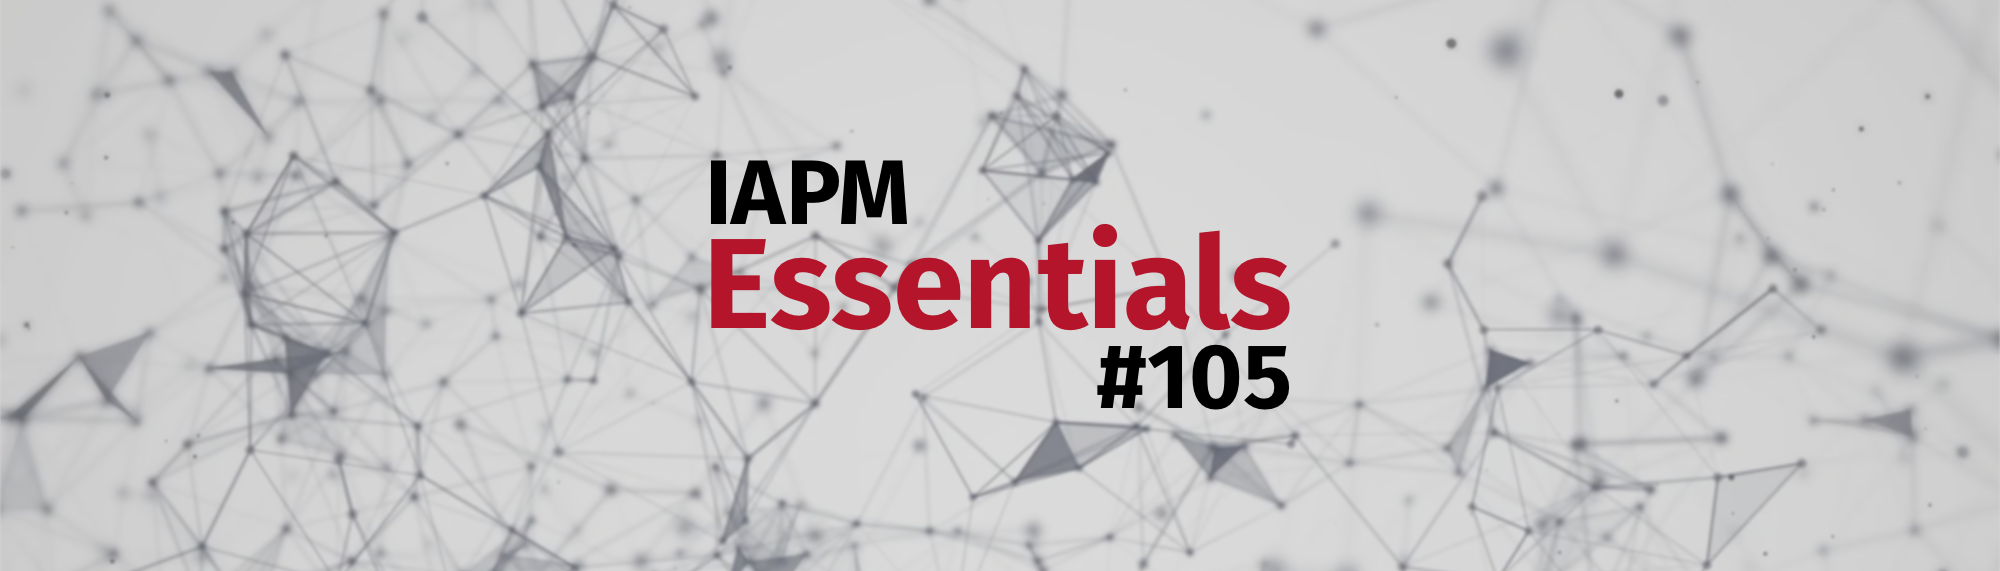 IAPM Essentials #105 - PM Neuigkeiten | IAPM